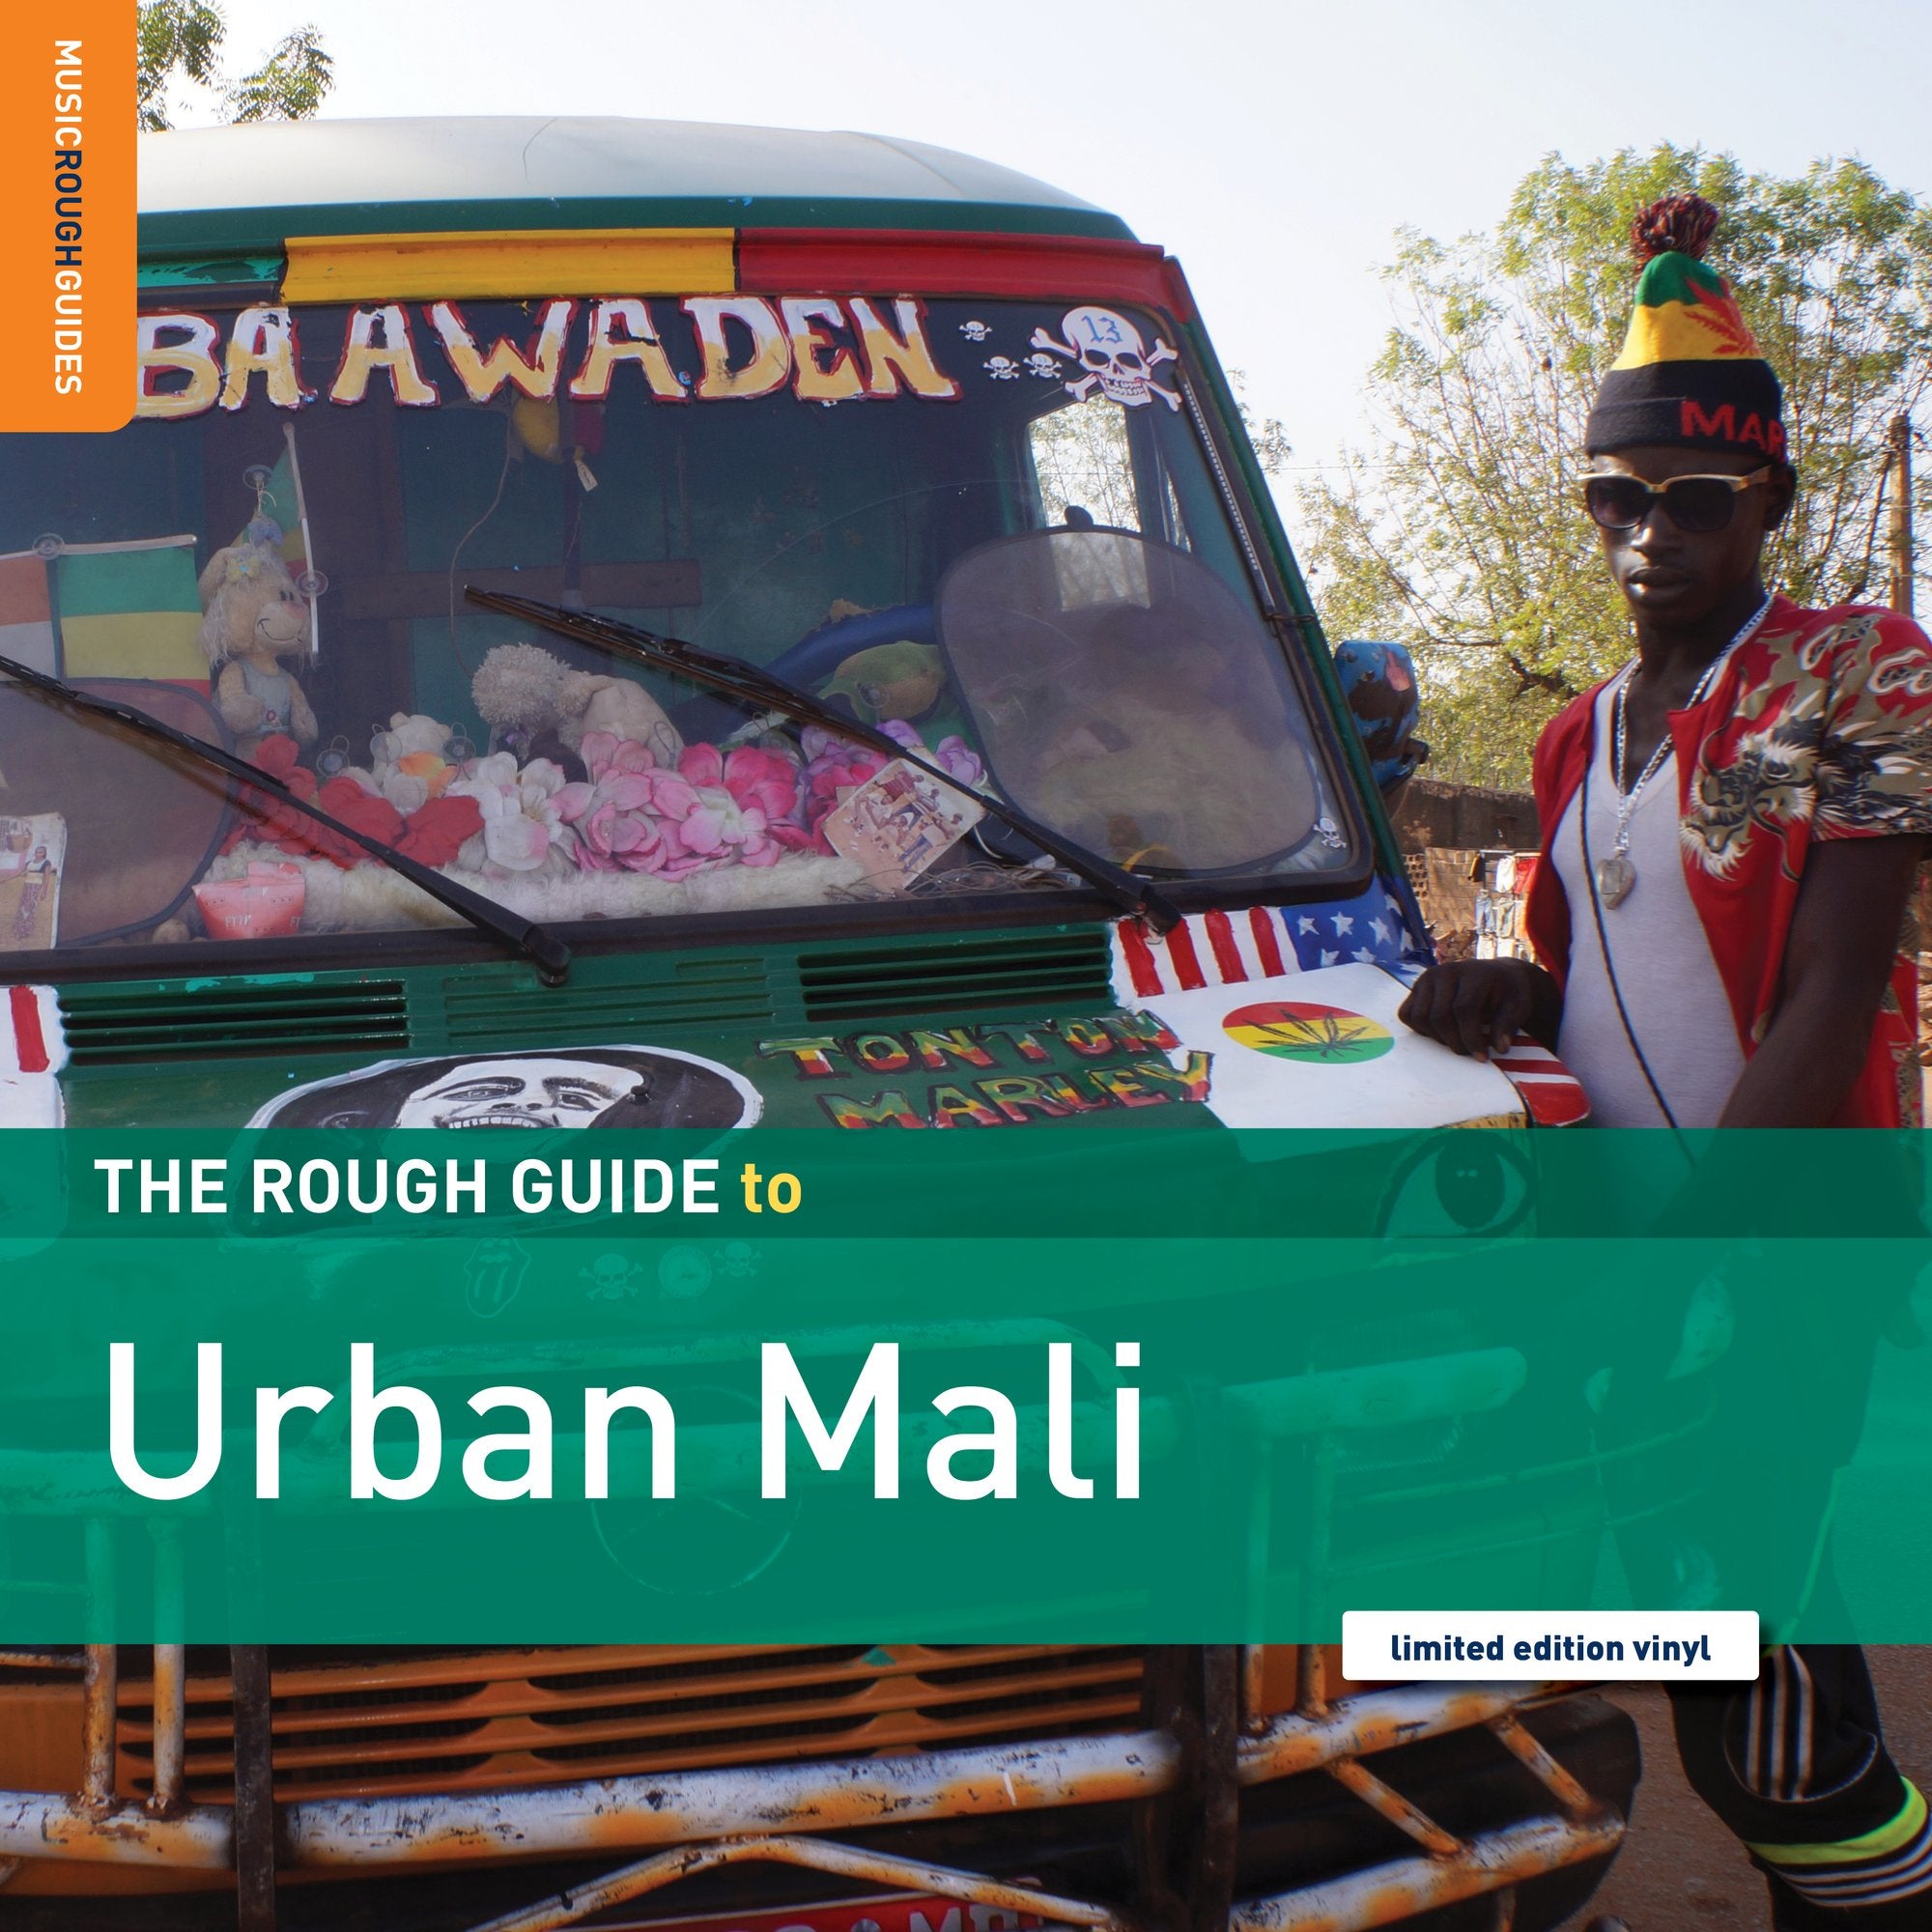 VARIOUS - The Rough Guide to Urban Mali - LP - Vinyl